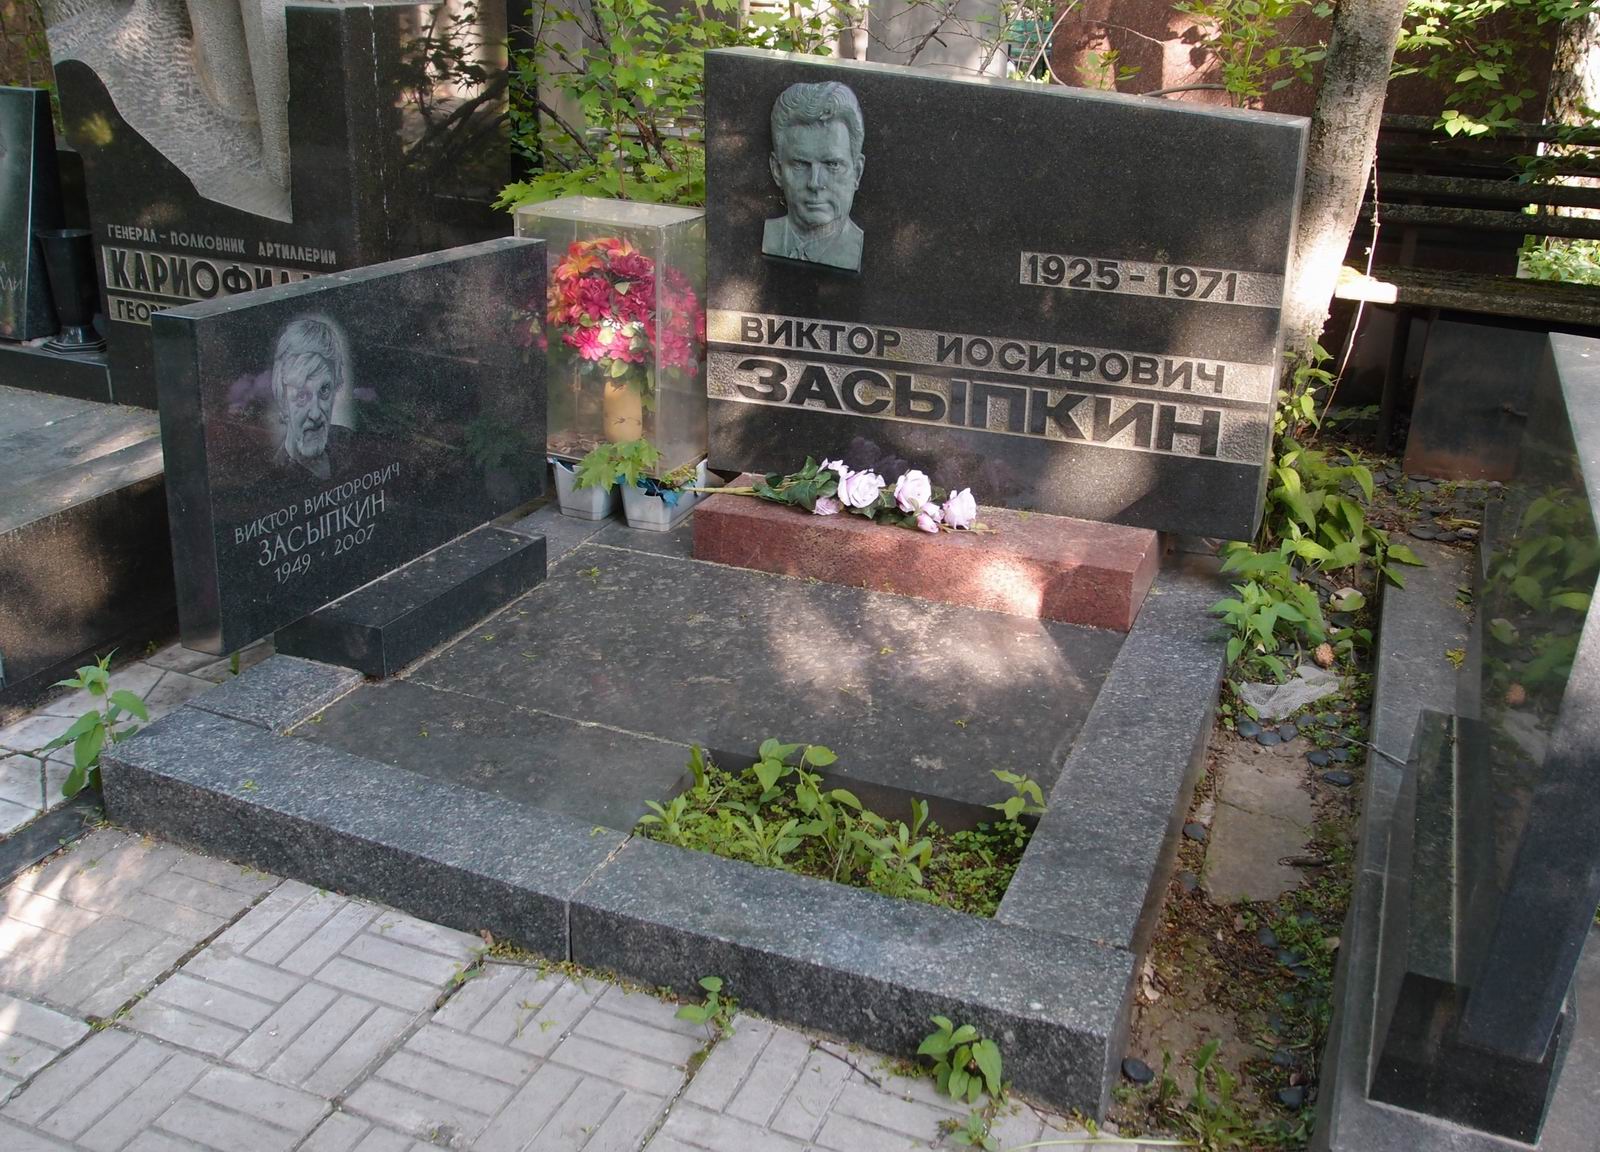 Памятник на могиле Засыпкина В.И. (1925-1971), на Новодевичьем кладбище (7-16-7).